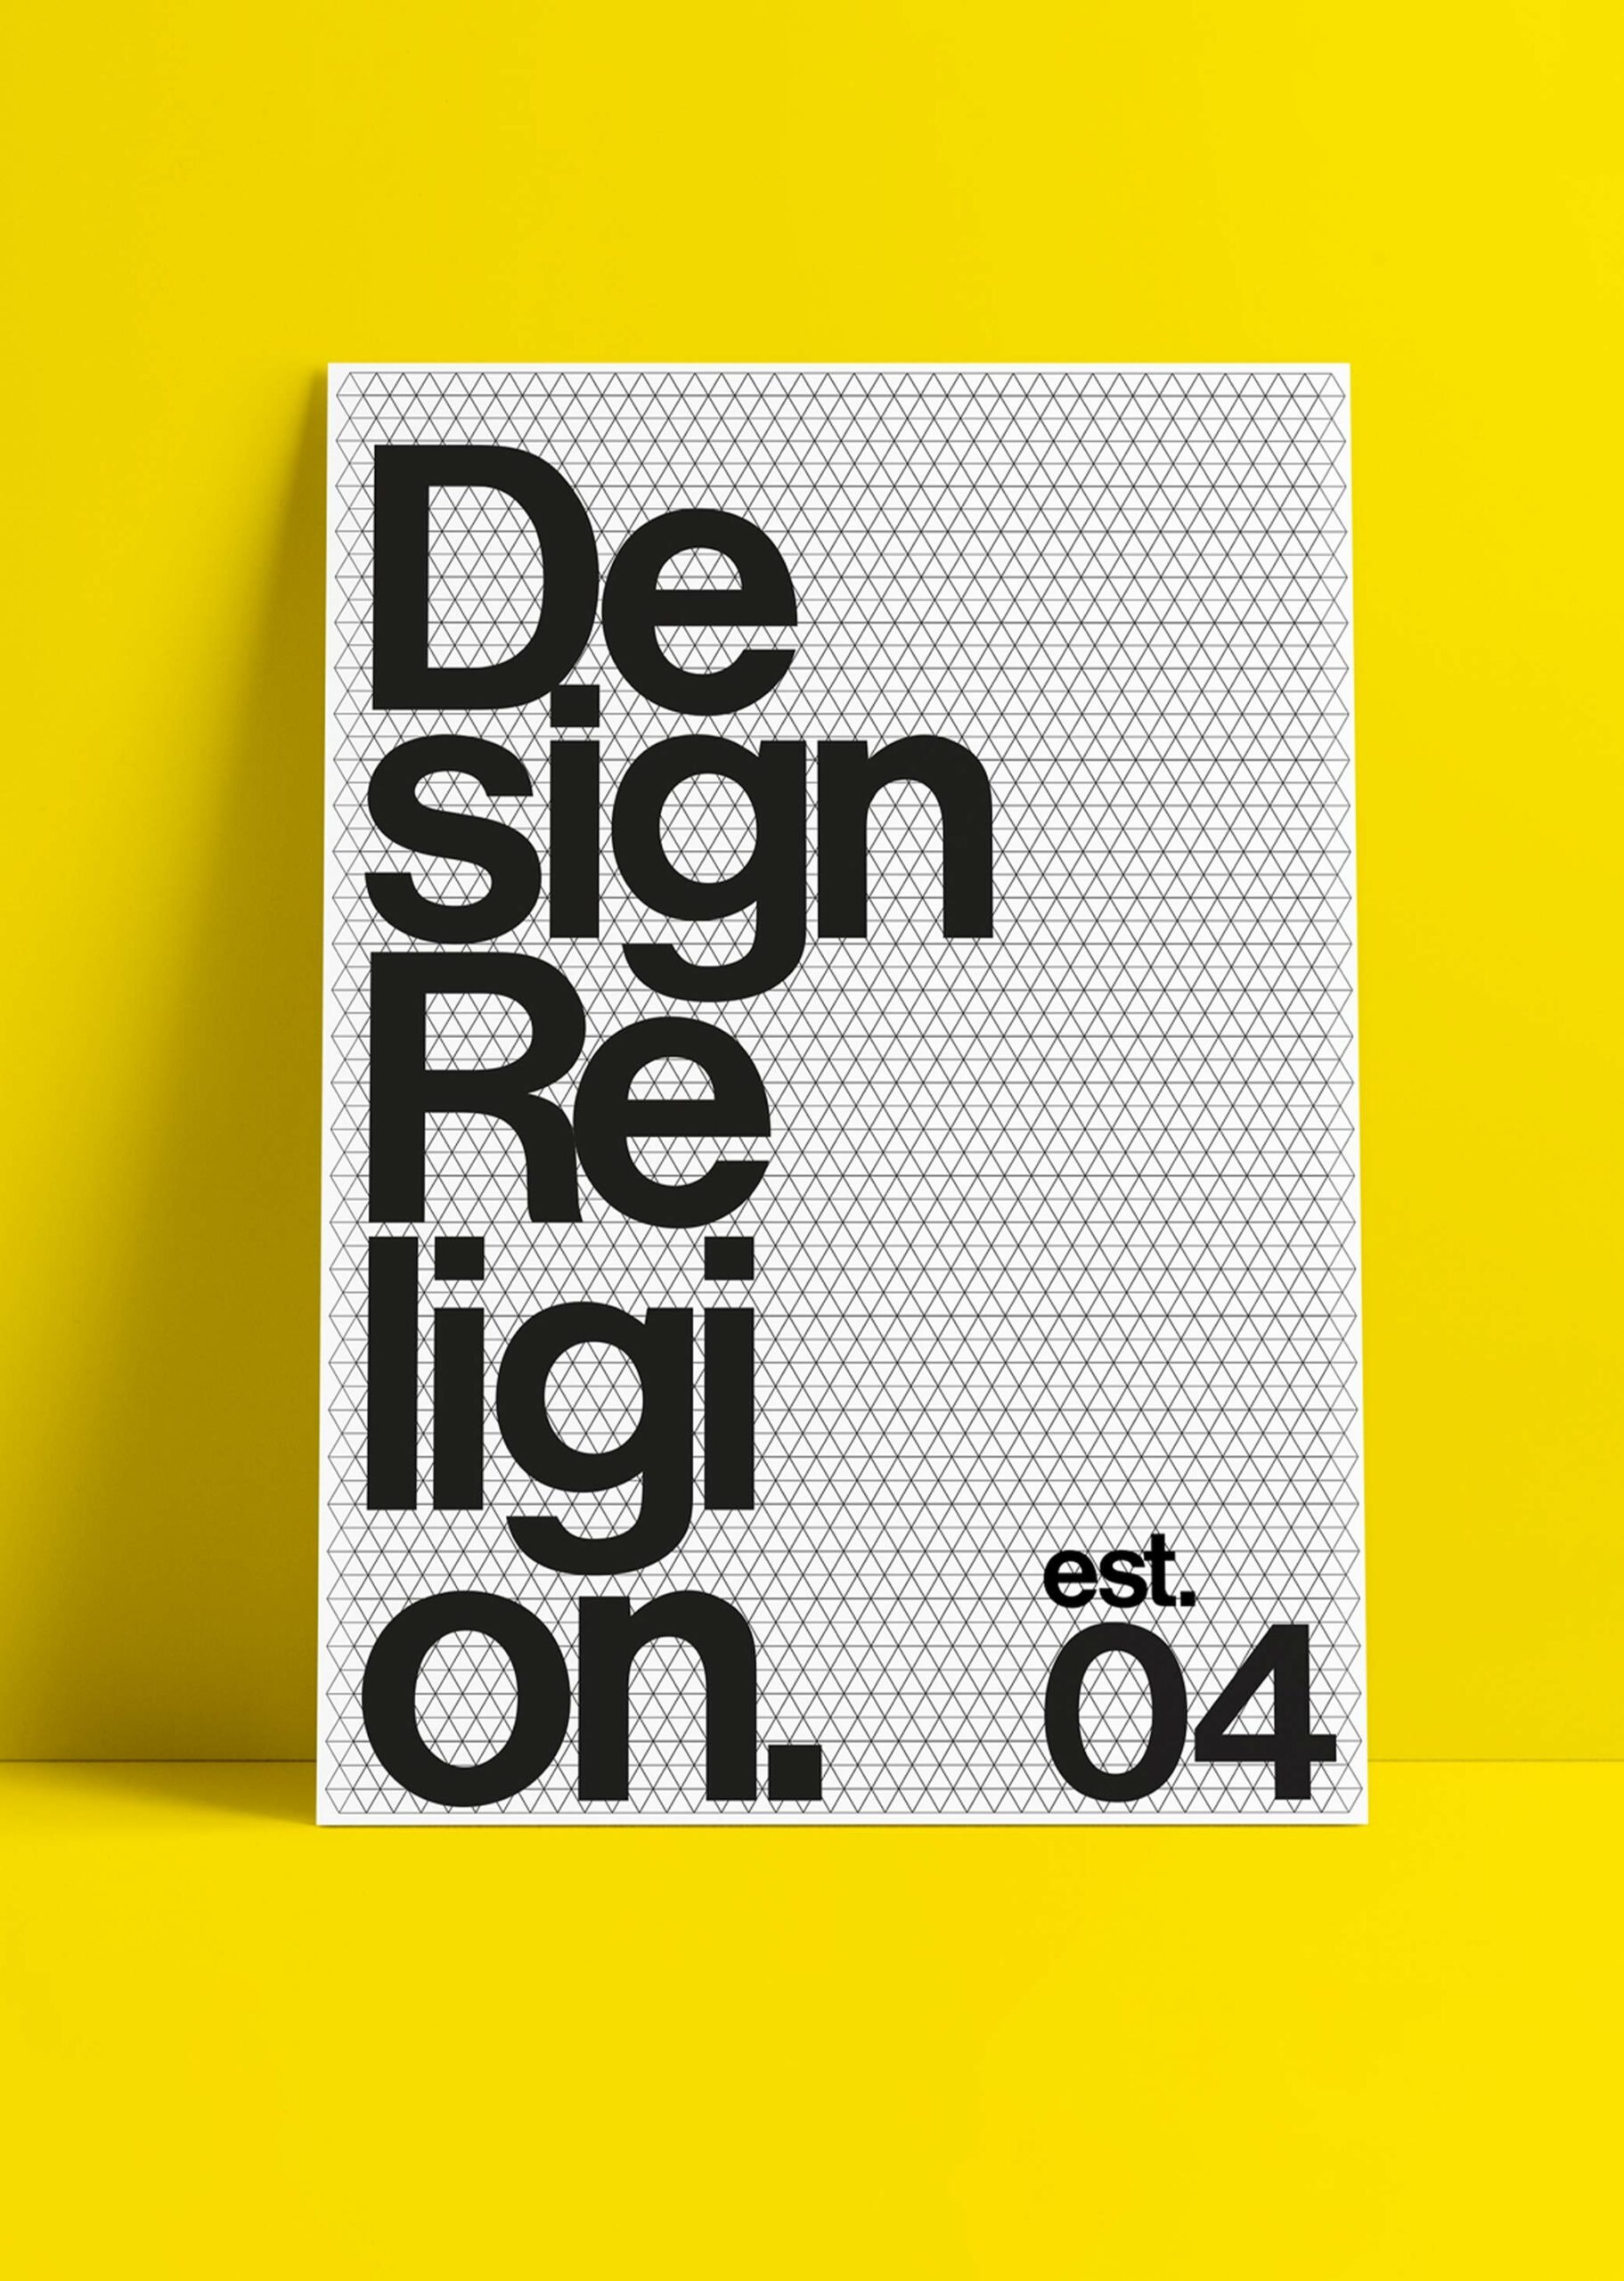 DesignReligion mono typographical poster design on a bright yellow background